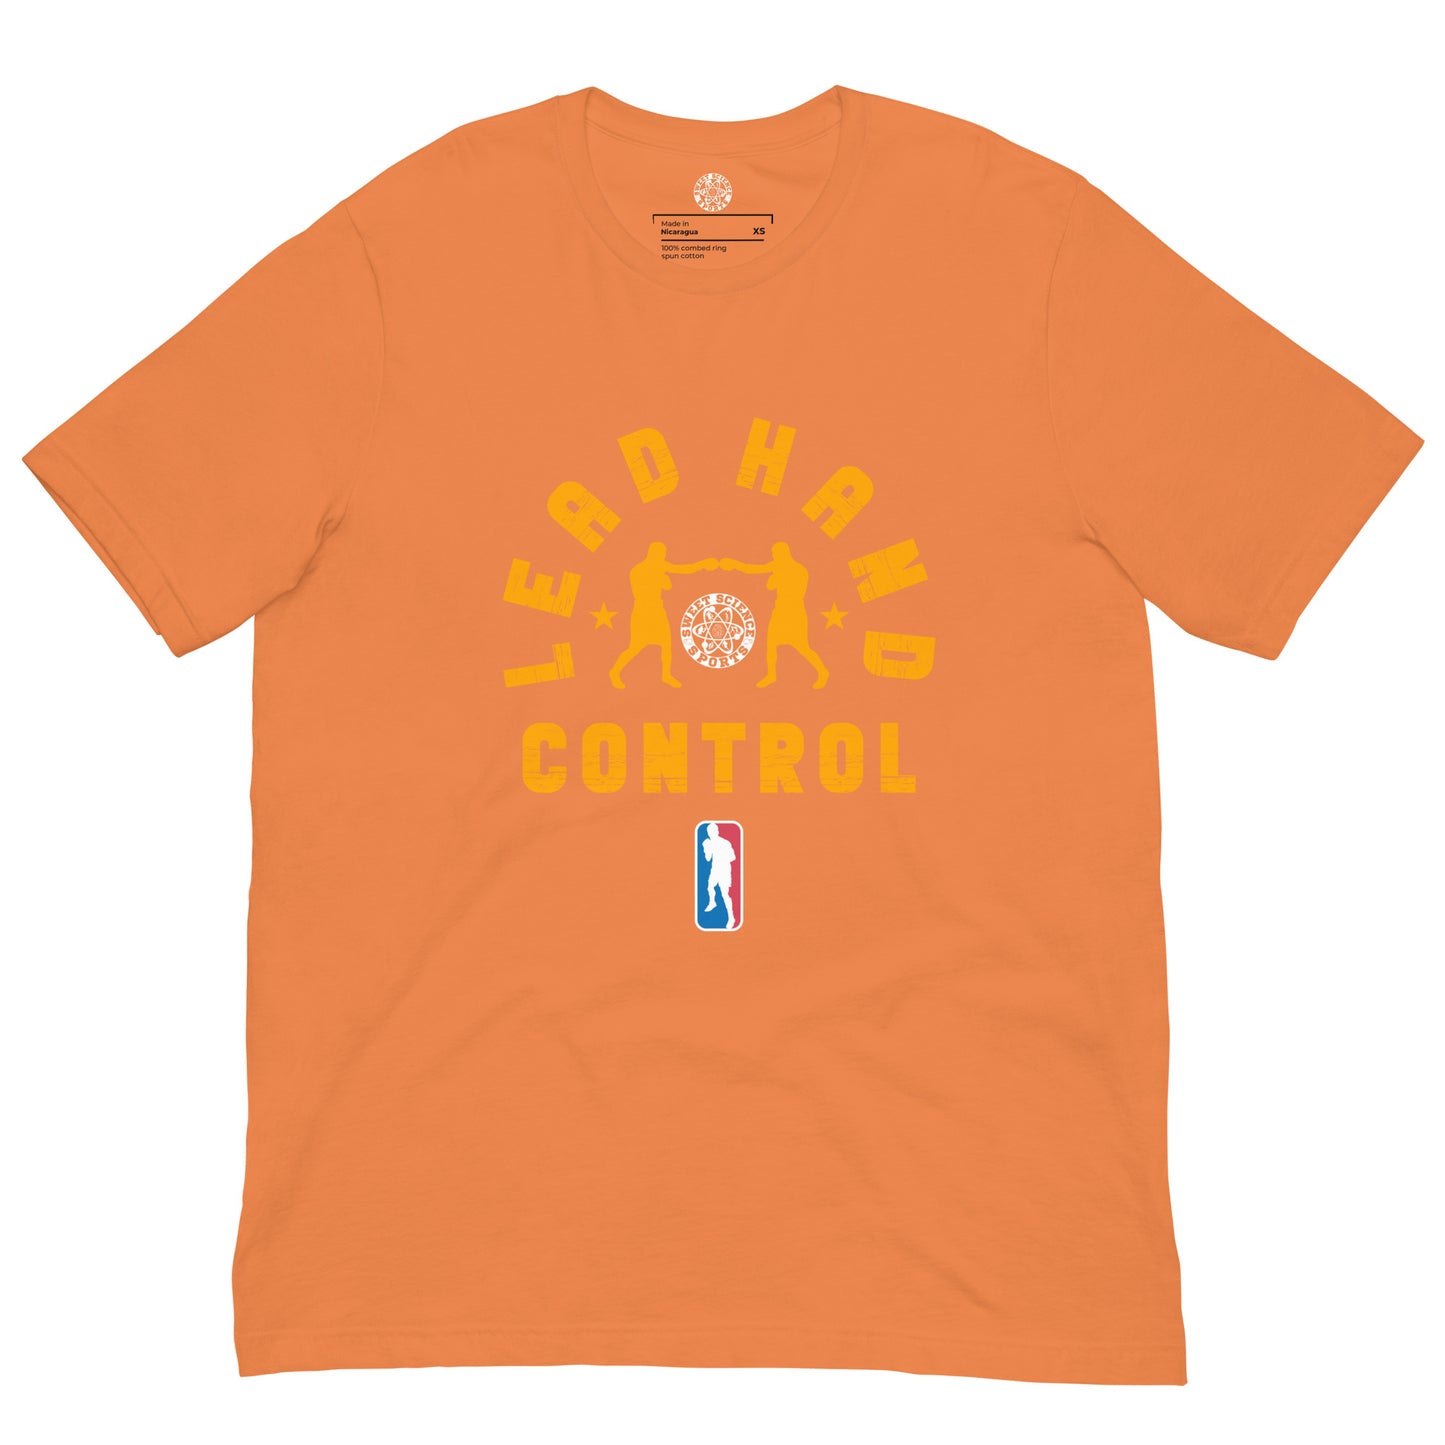 Lead Hand Control  t-shirt